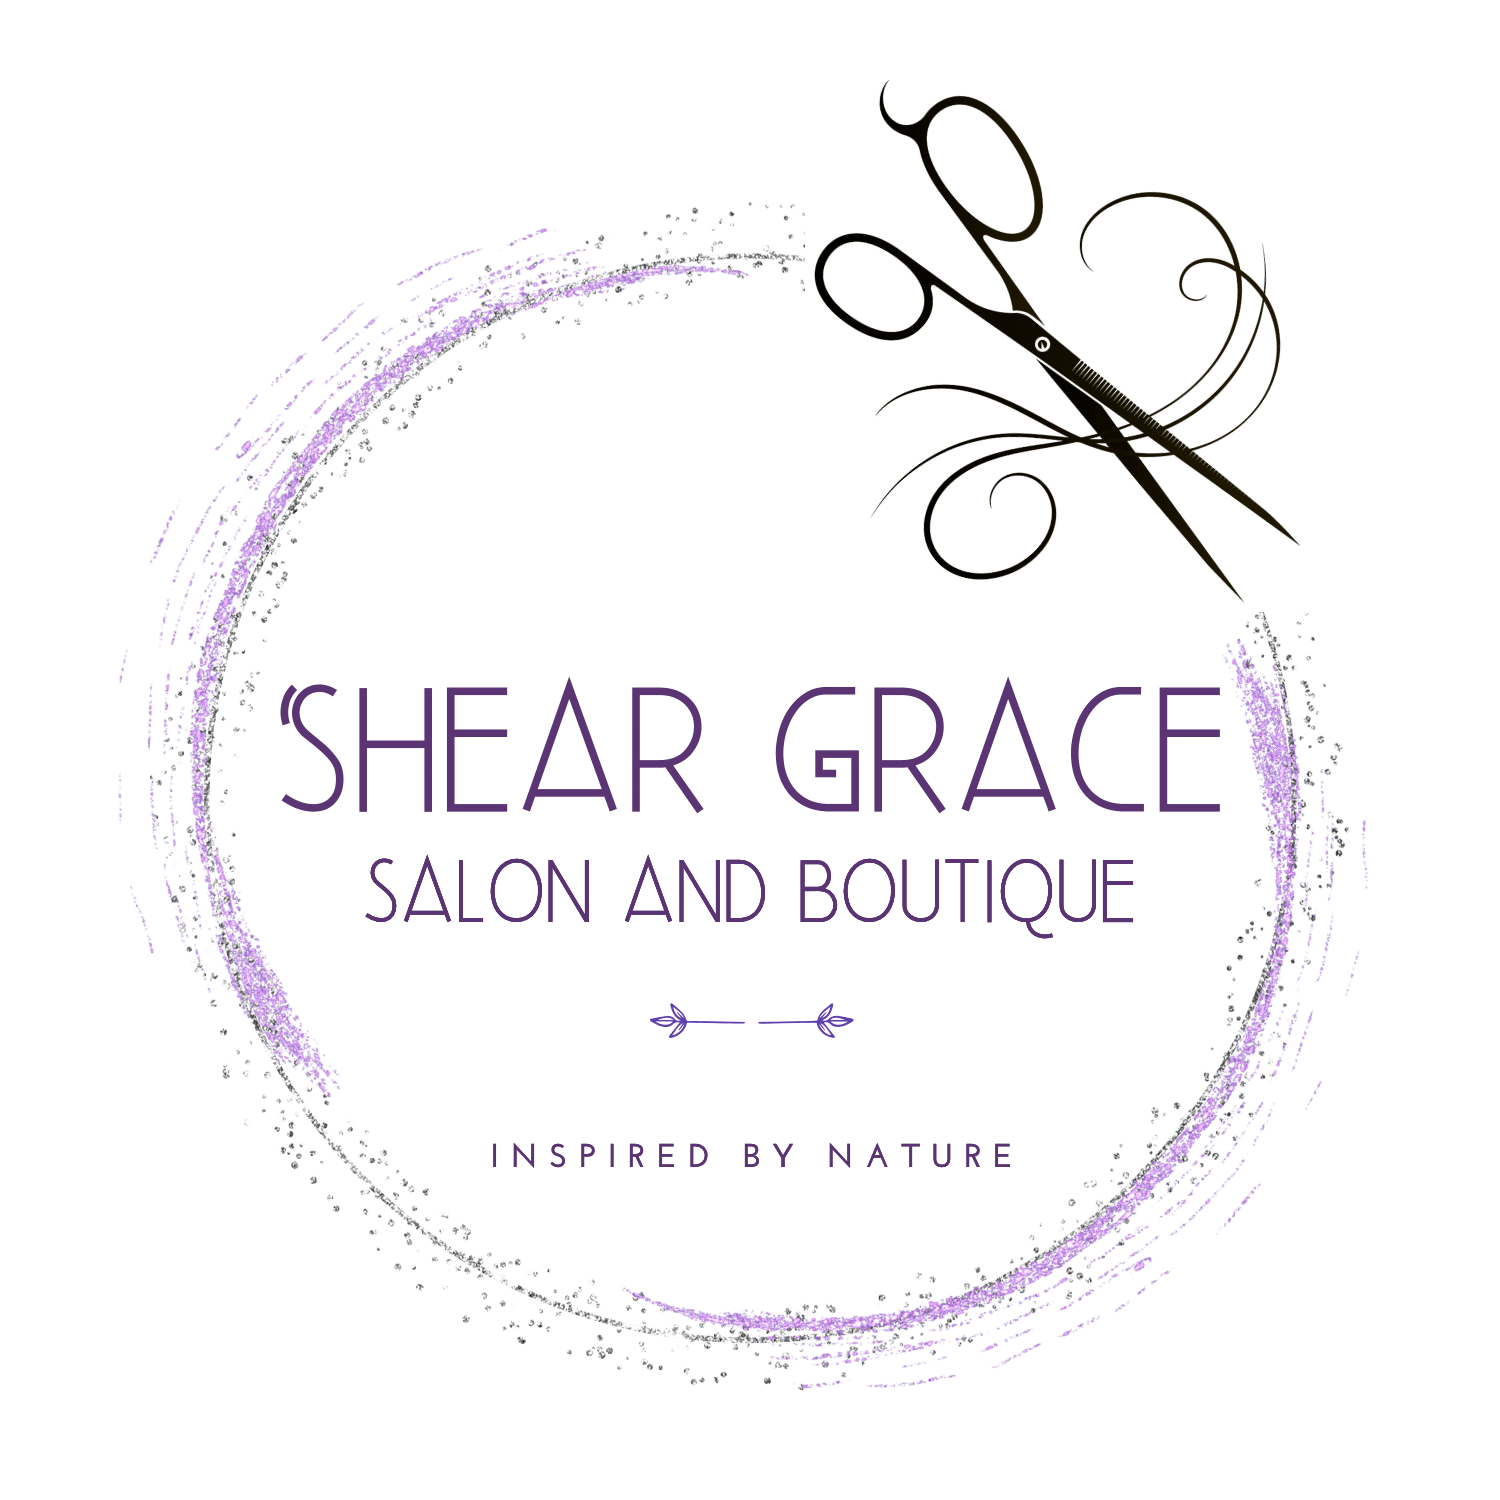 Shear Grace Salon and Boutique